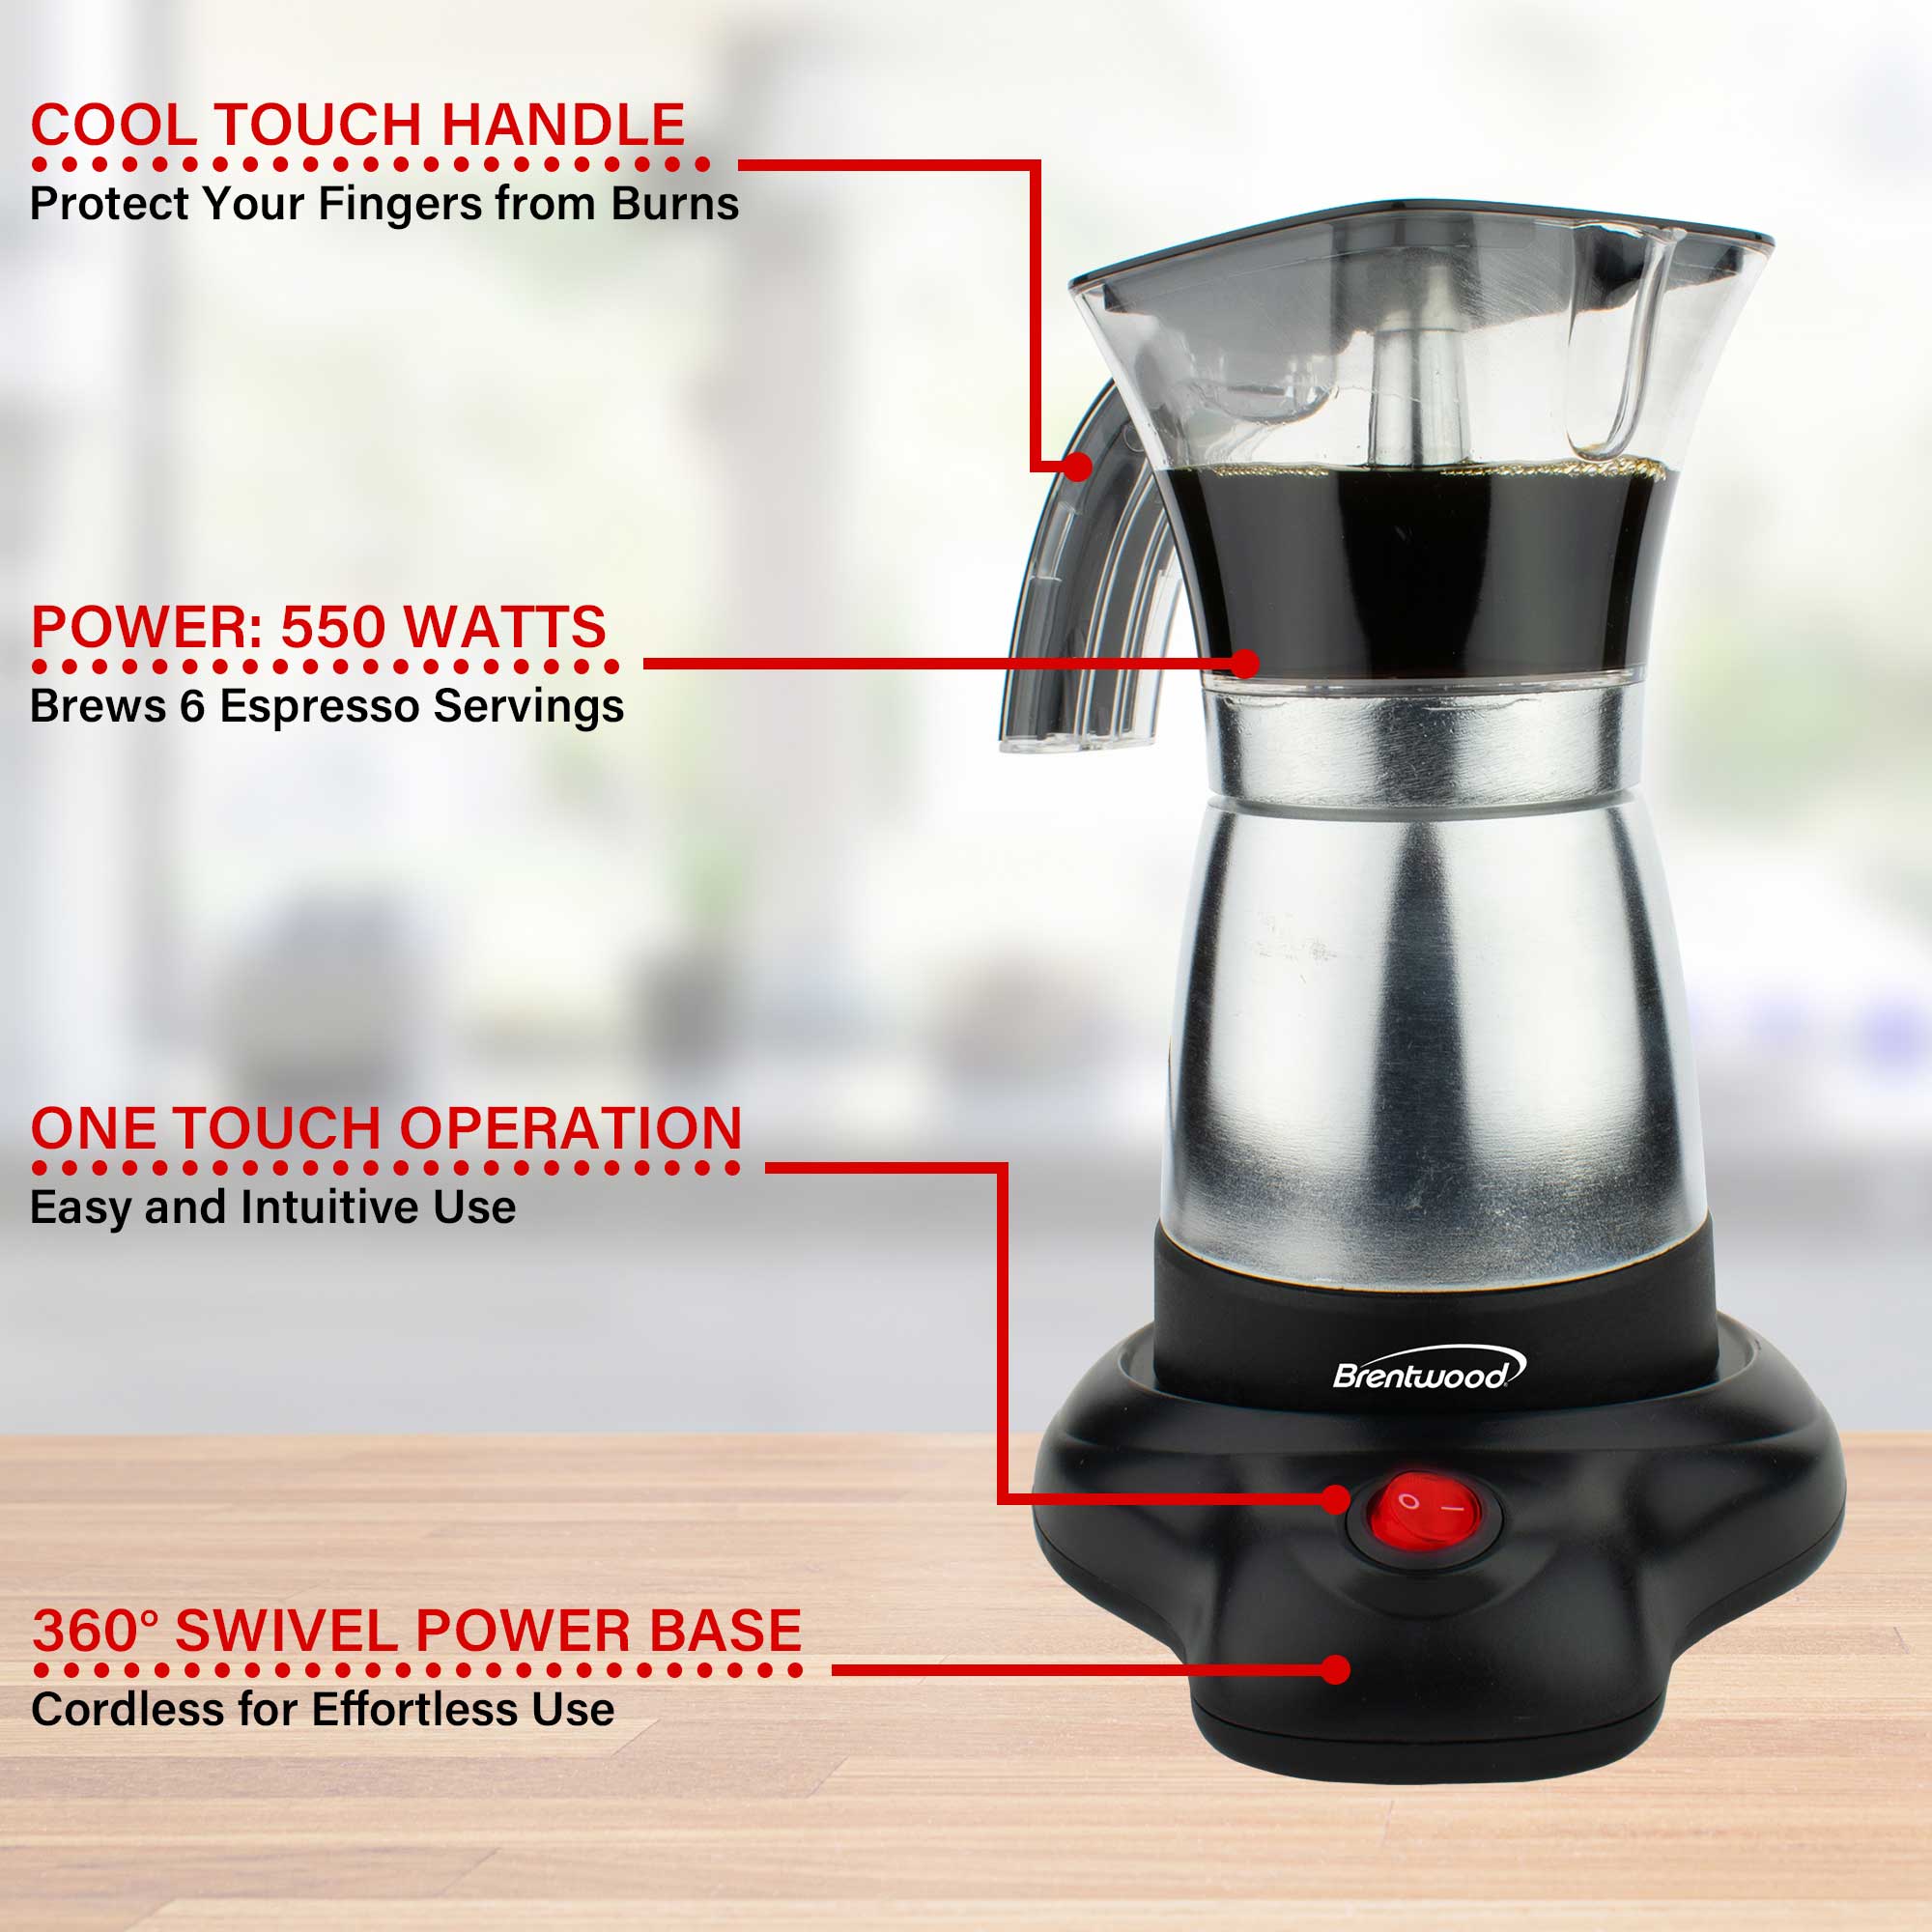 How to Make Espresso with a Moka Pot (Without an Espresso Machine